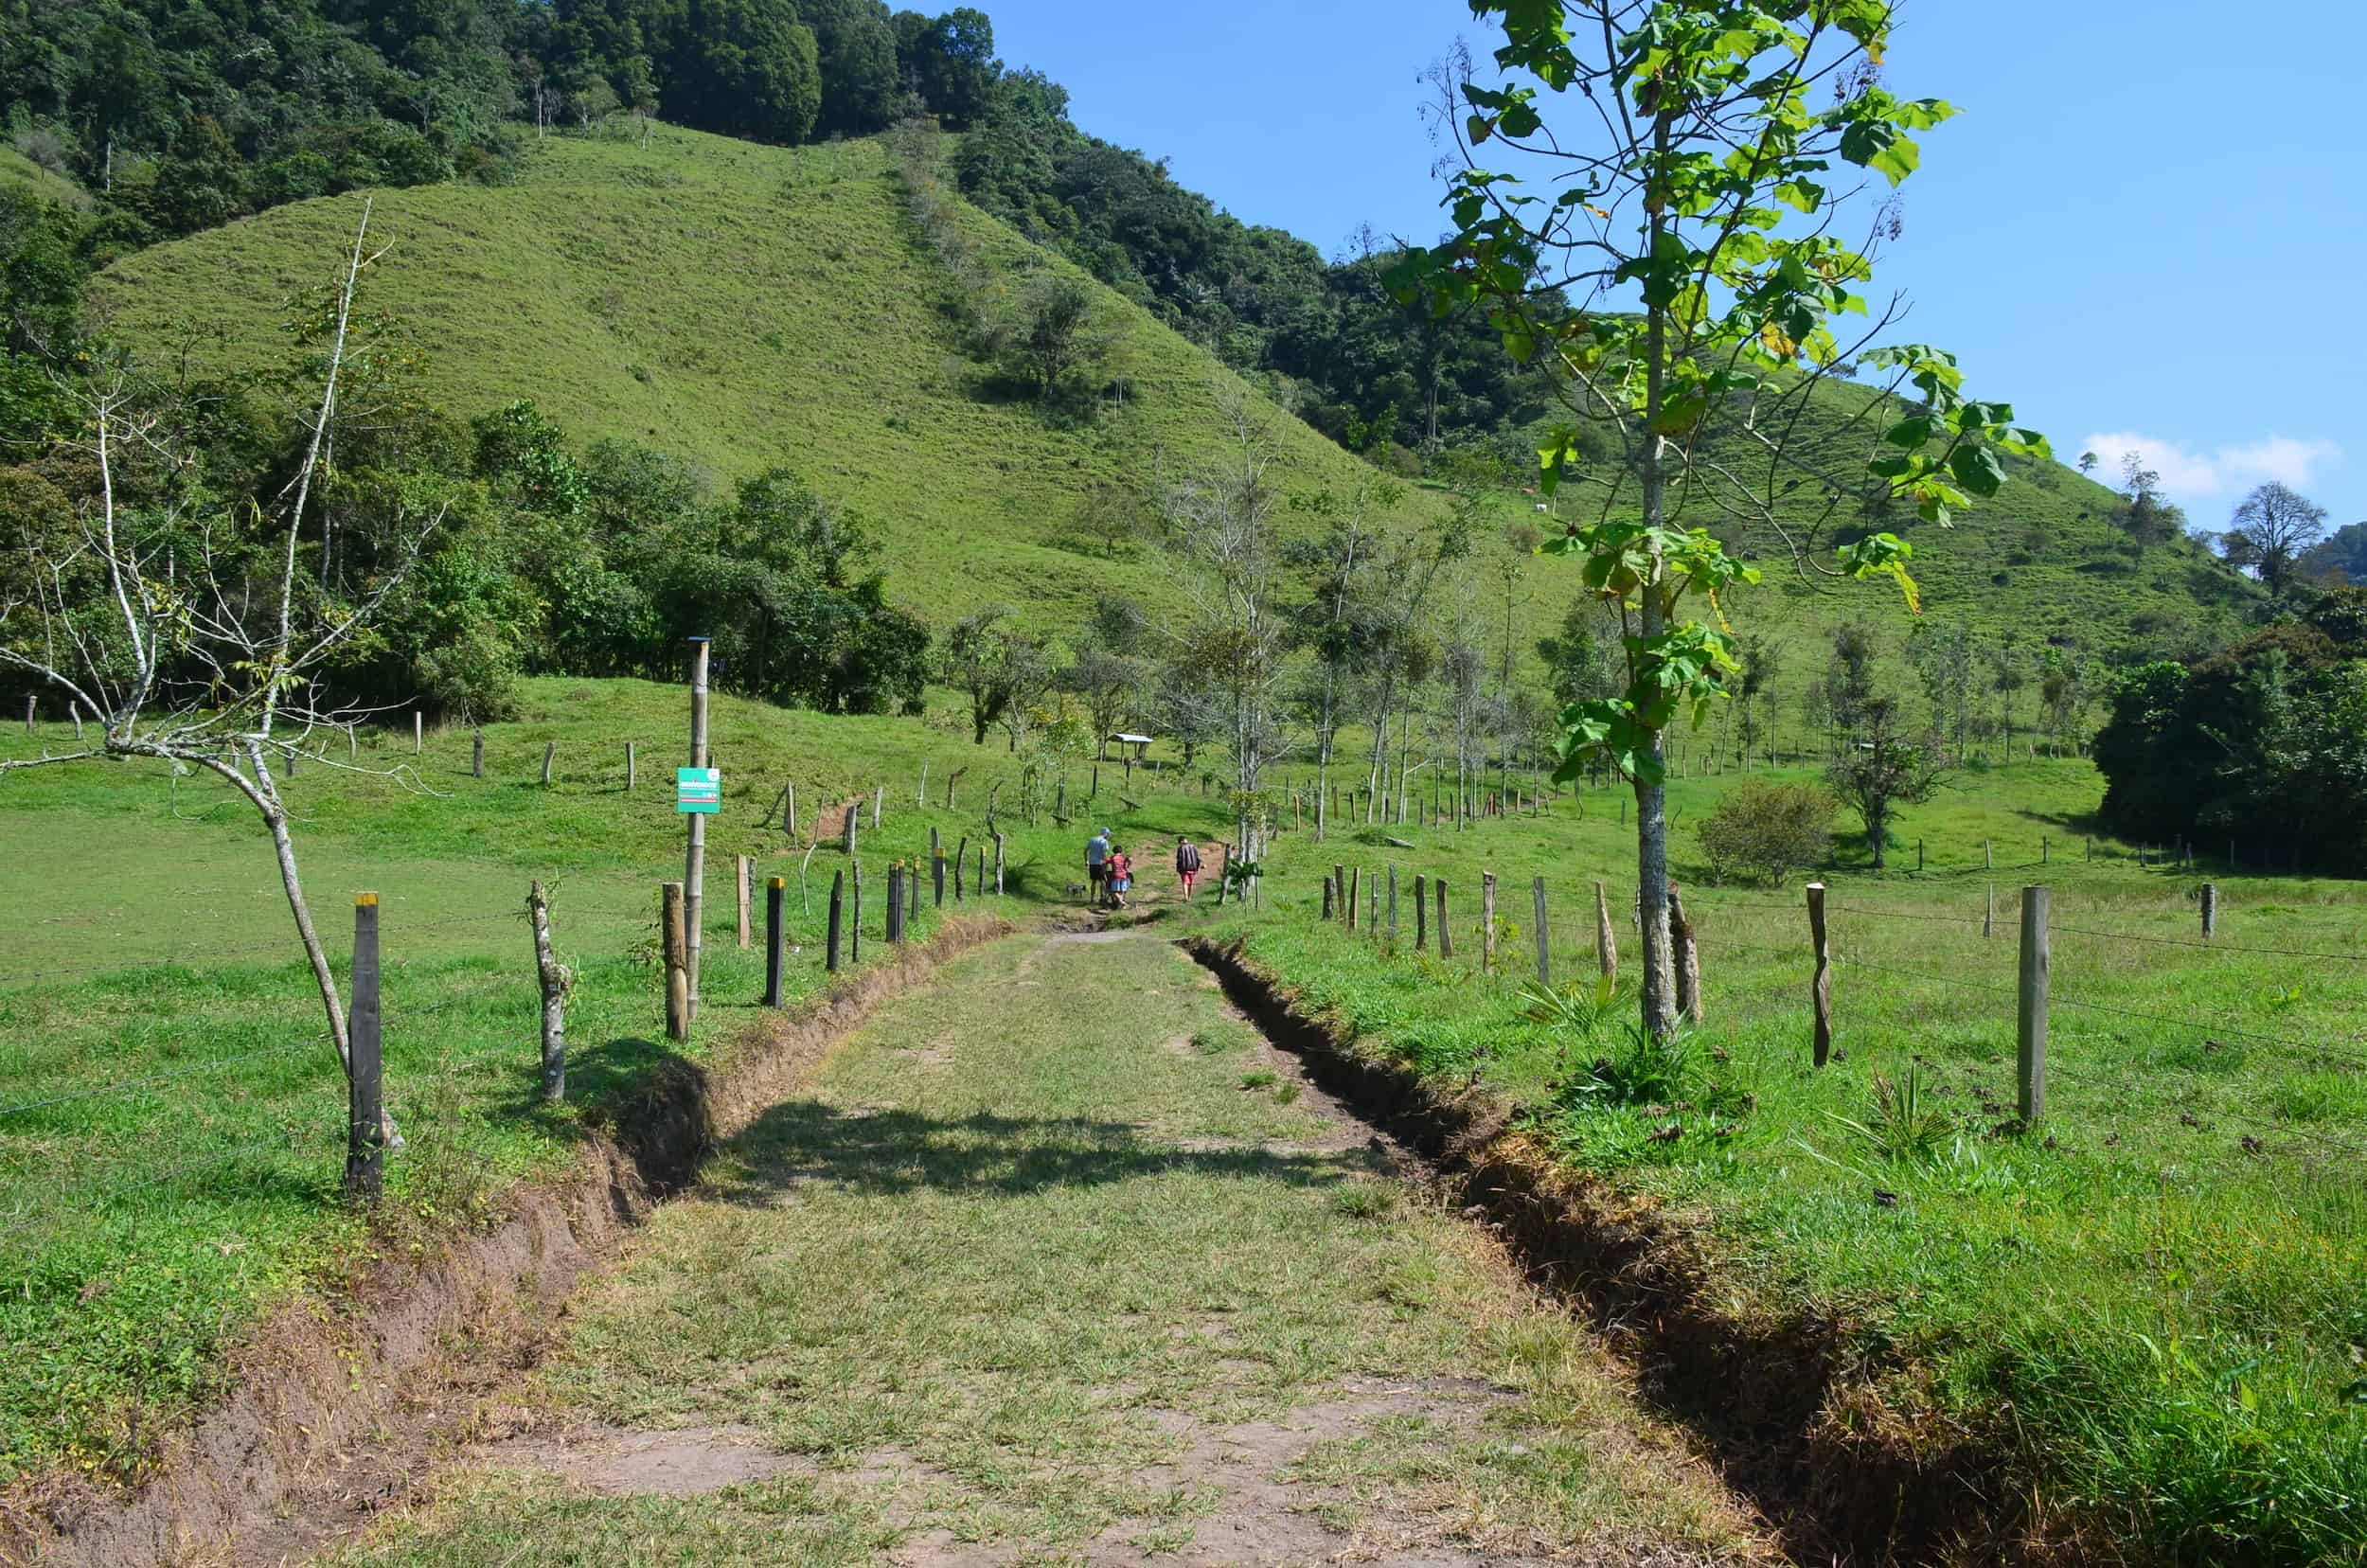 Beginning of the Antonio Trail at Santa Rita Nature Reserve in Boquía, Salento, Quindío, Colombia